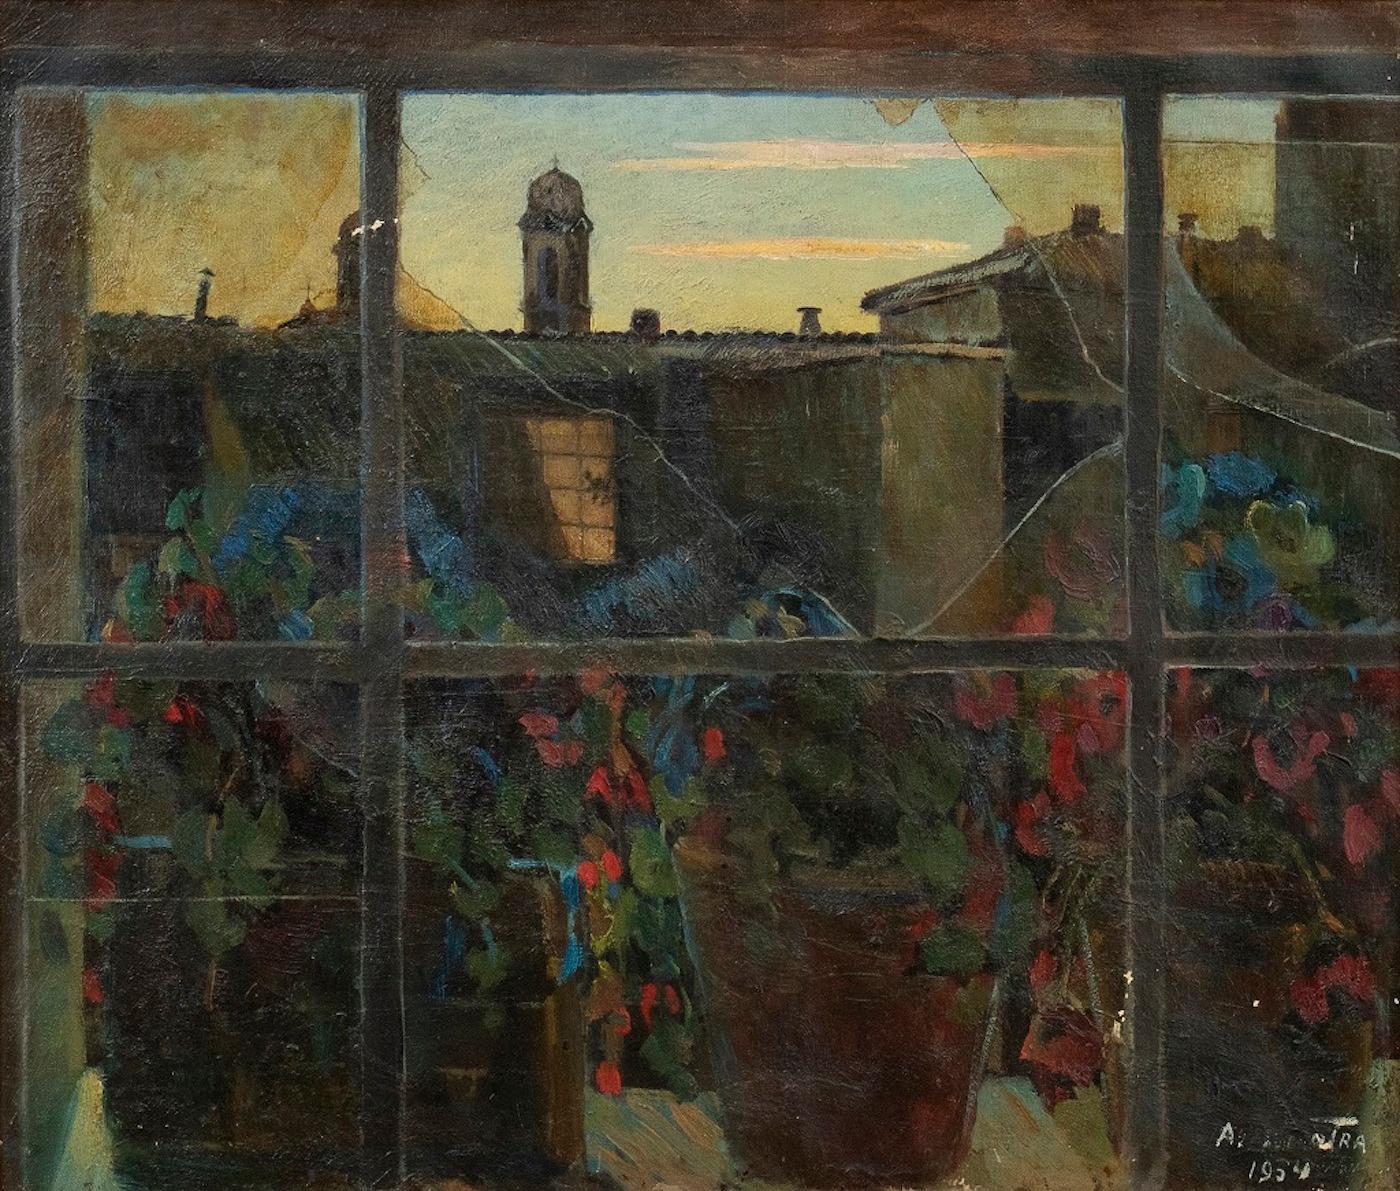 Nicotra da Cosenza Landscape Painting - View of Via Margutta - Original Oil on Canvas by N. da Cosenza - 1954